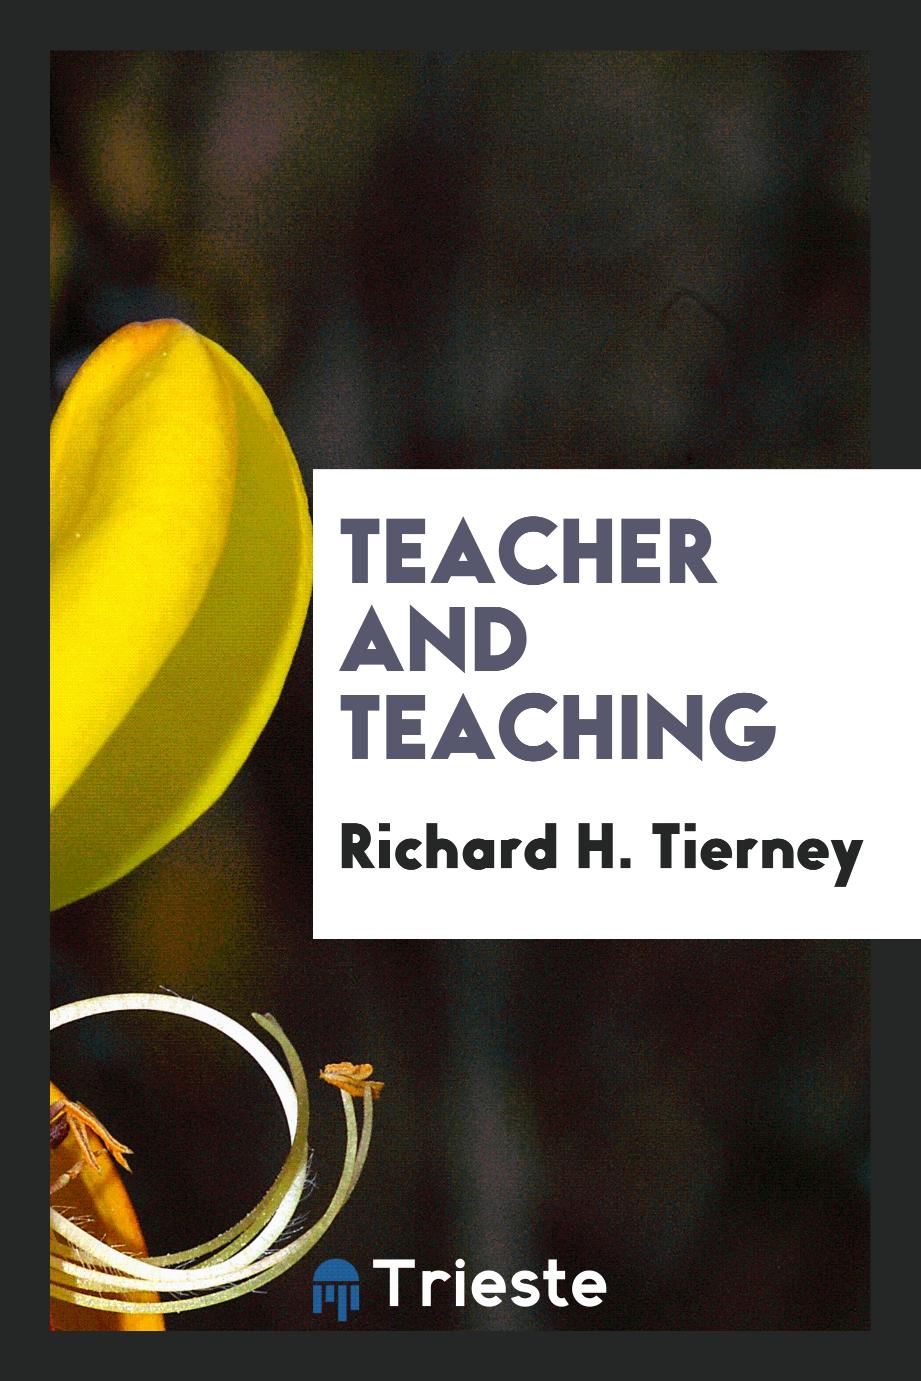 Teacher and teaching